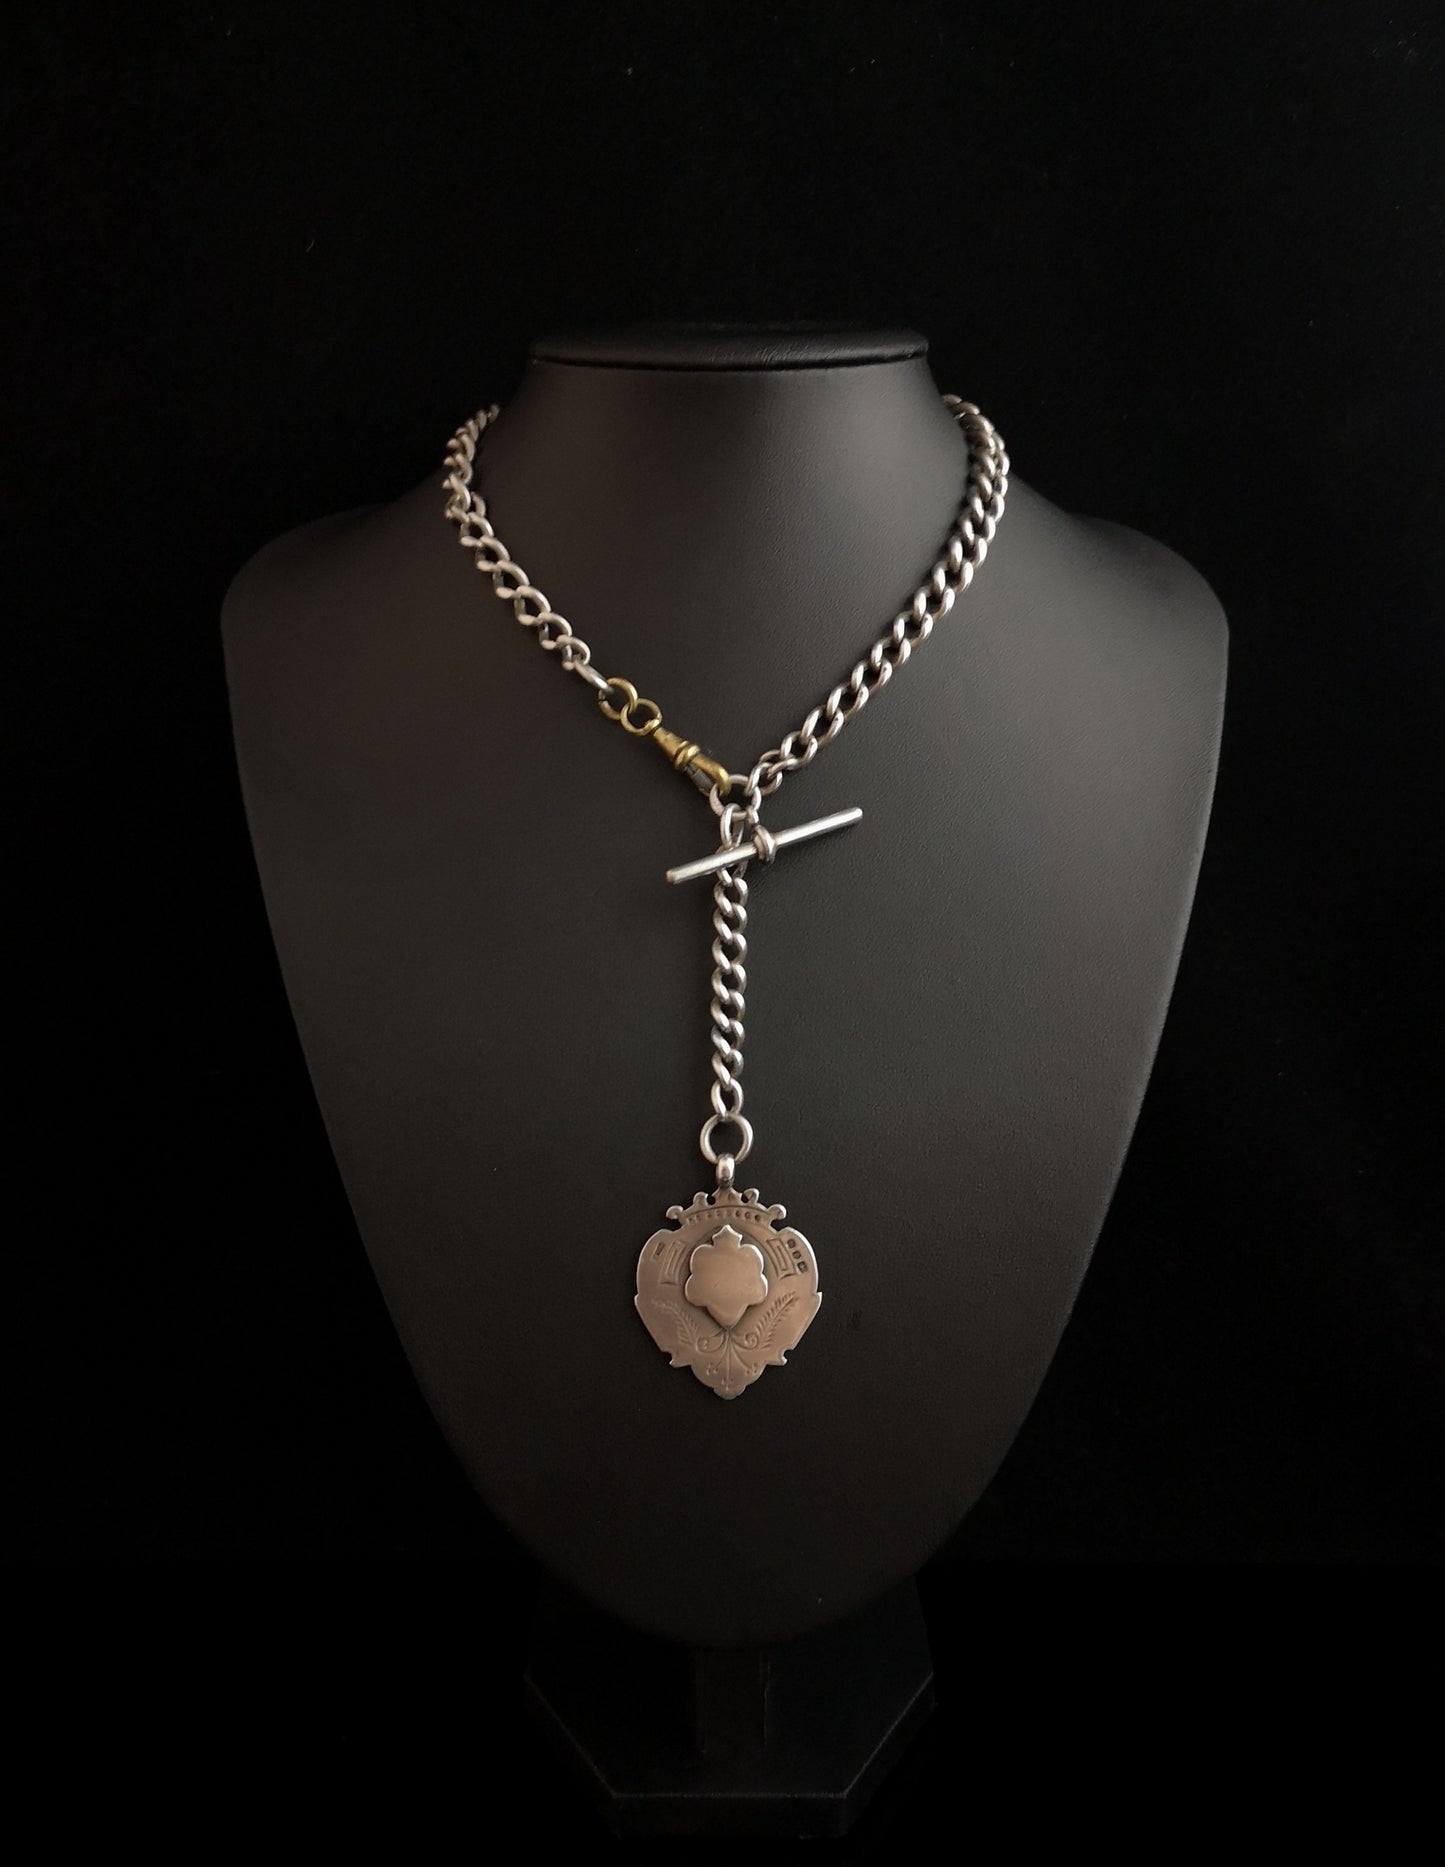 Antique Victorian silver Albert chain, watch chain, fob